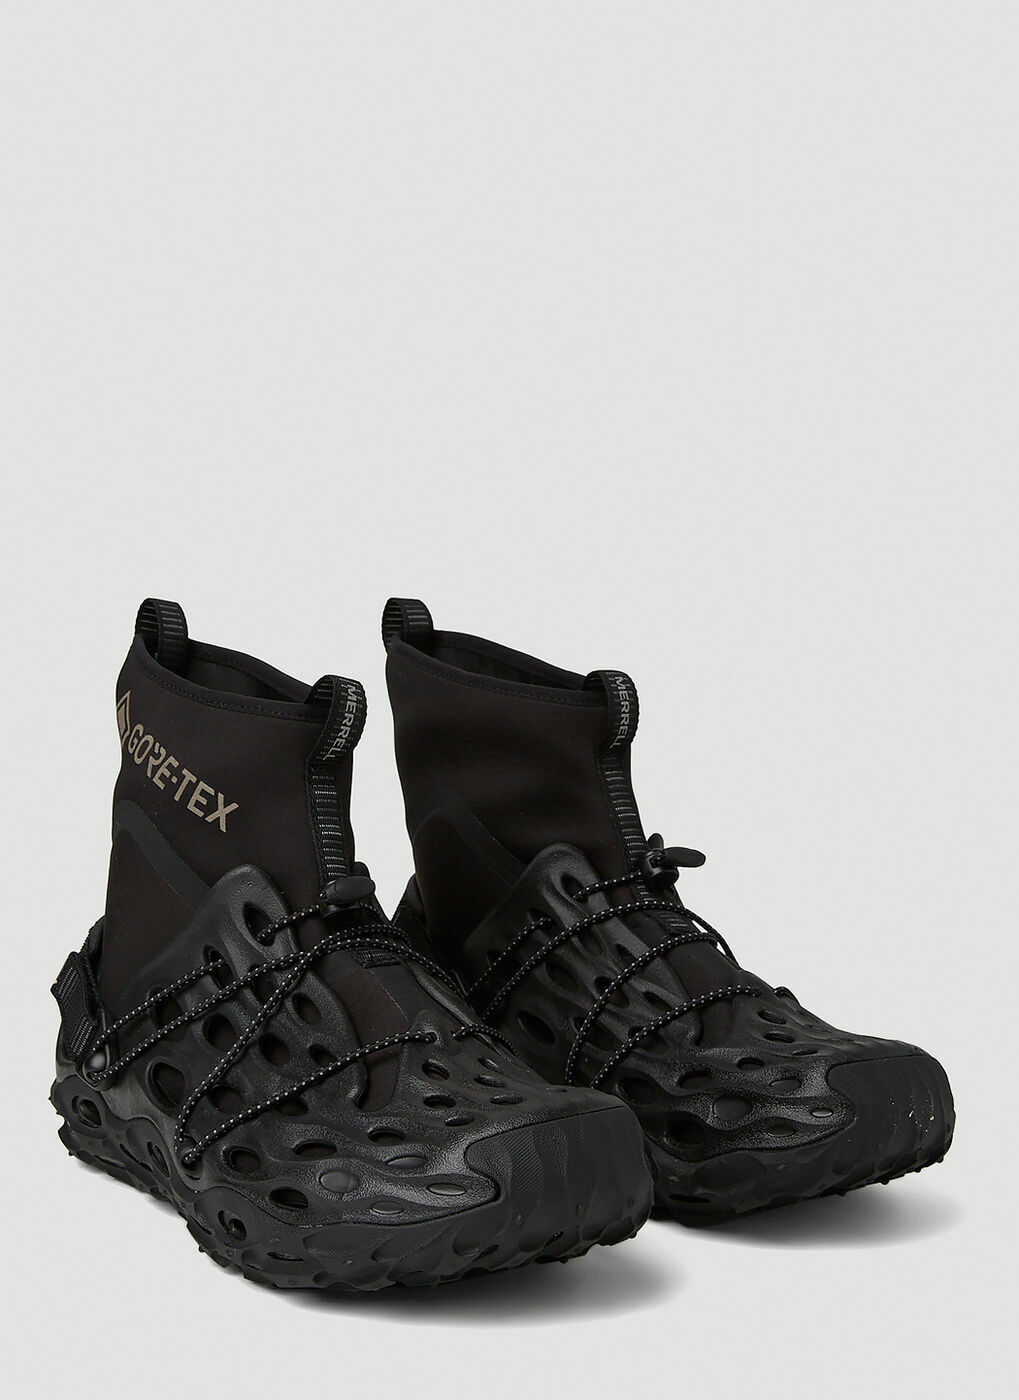 Hydro Moc AT Gore-Tex® Sneakers in Black Merrell 1TRL